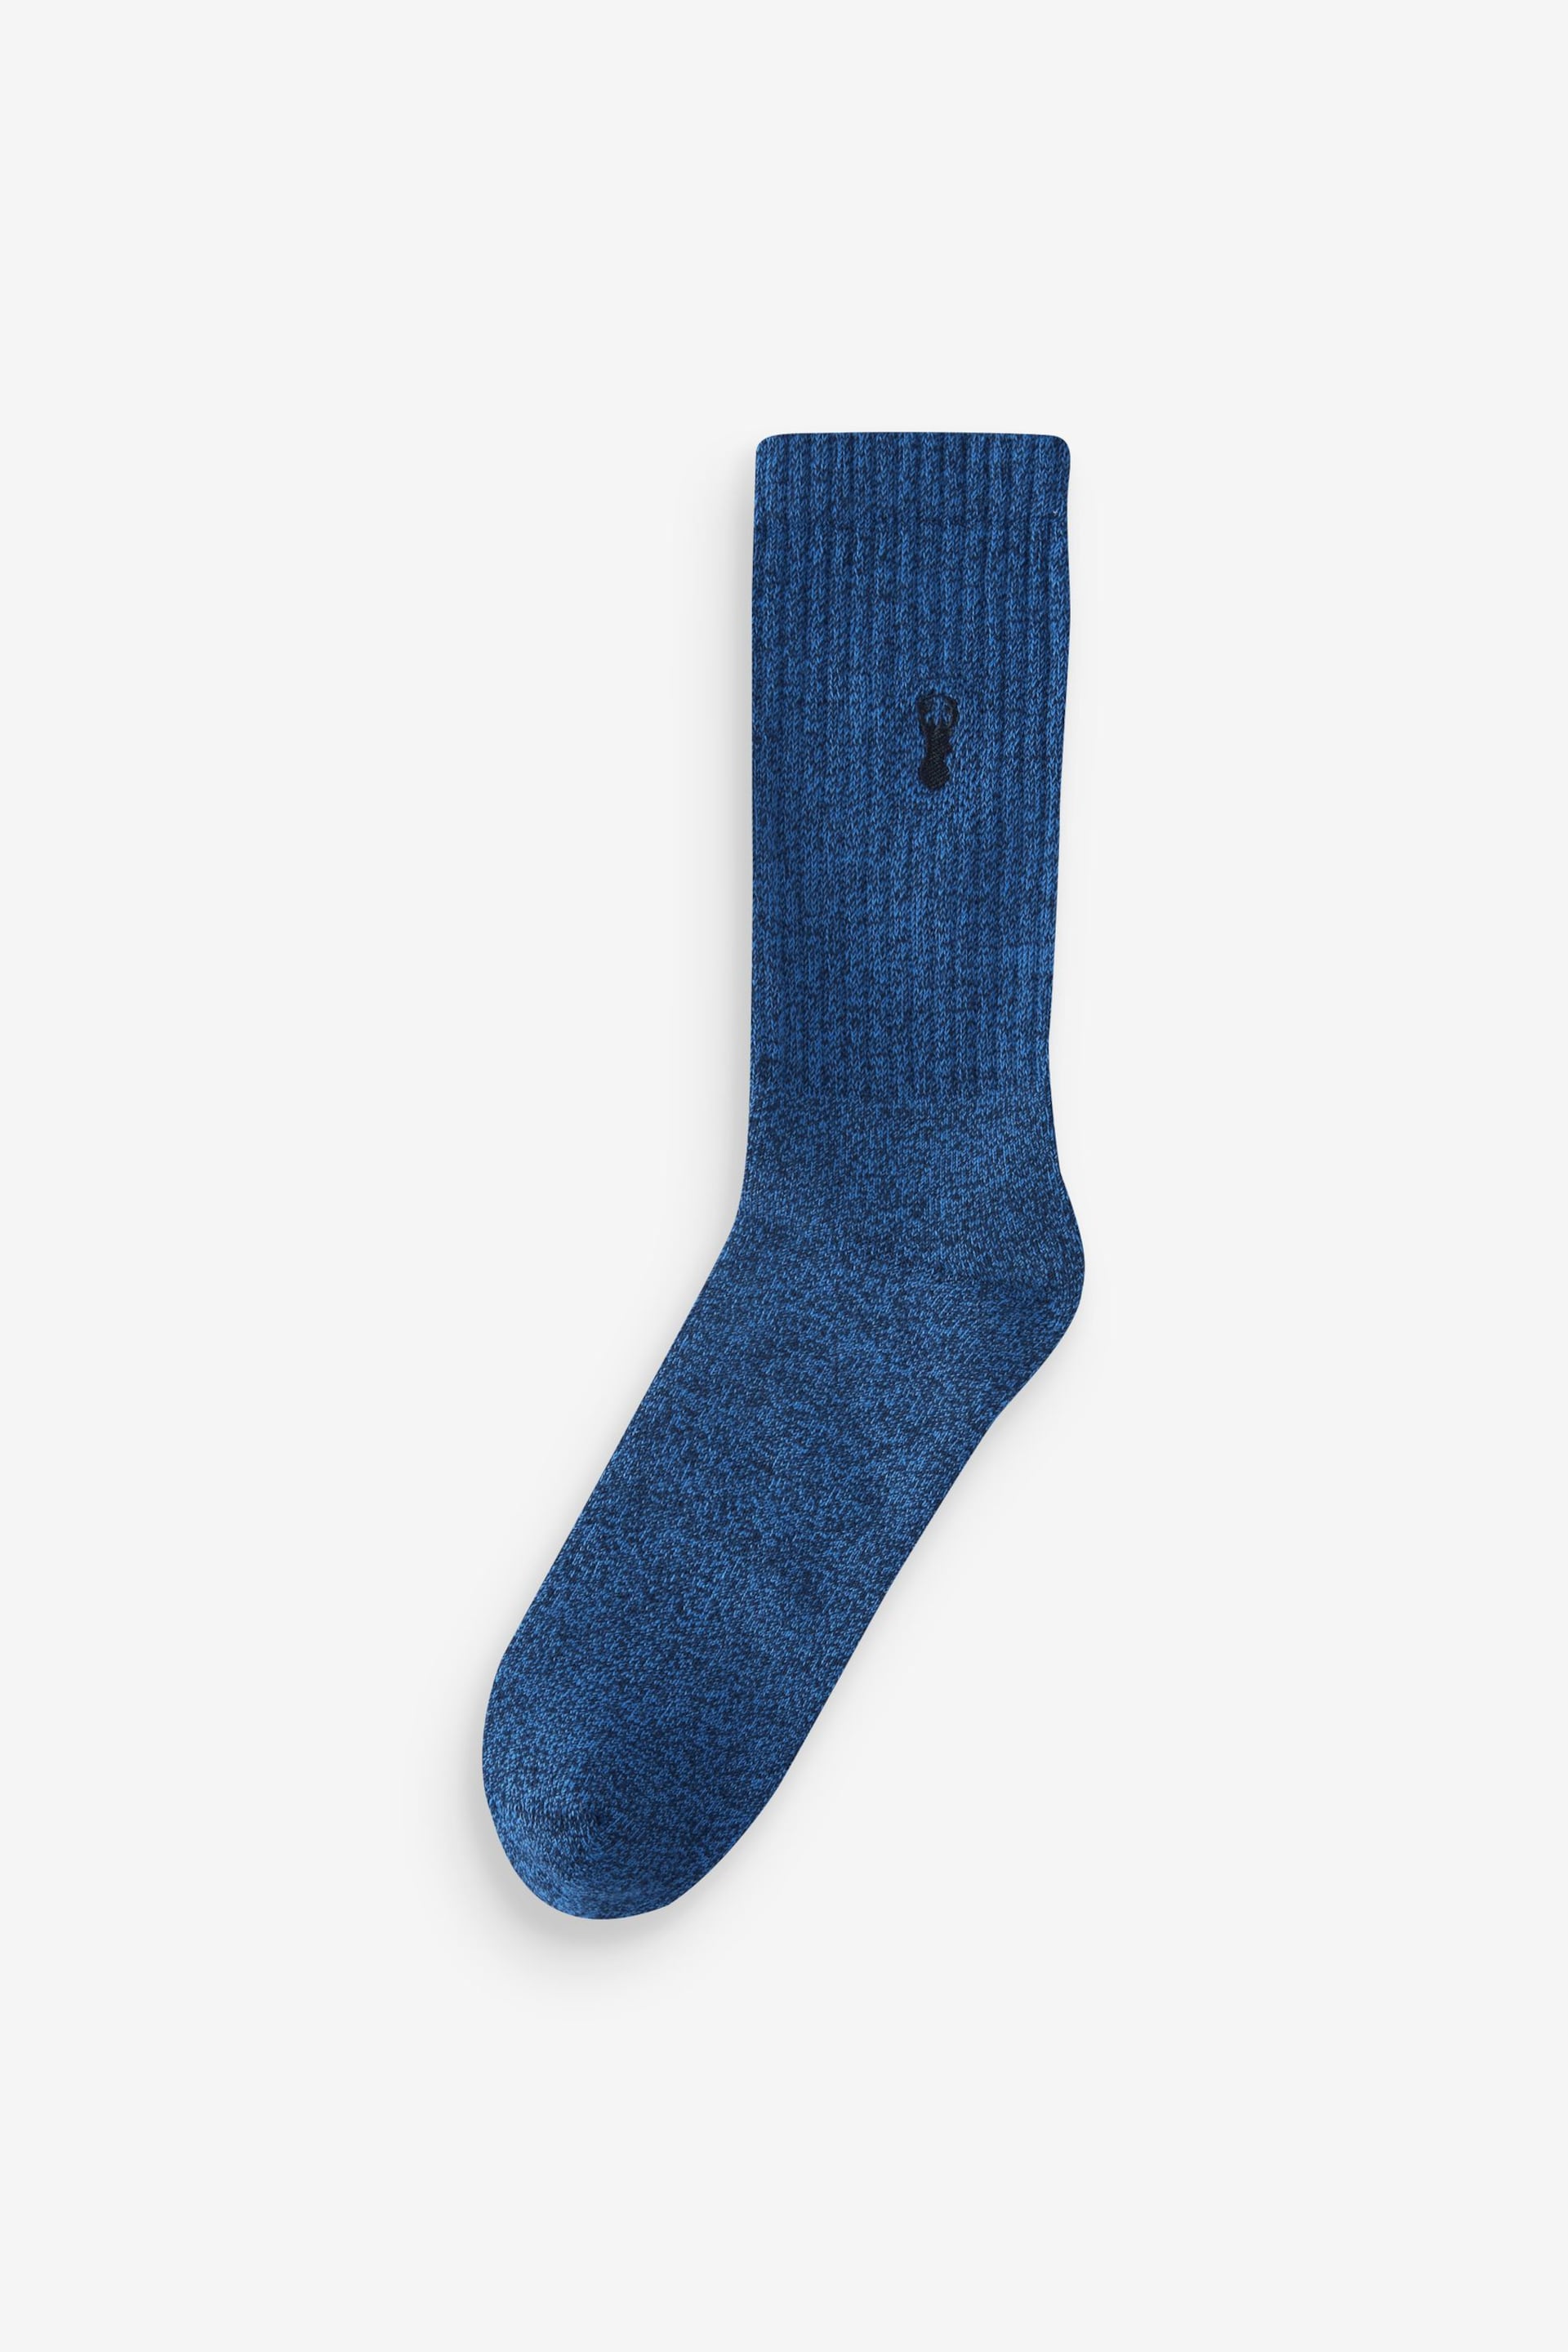 Blue Heavyweight Socks 15 Pack - Image 11 of 13